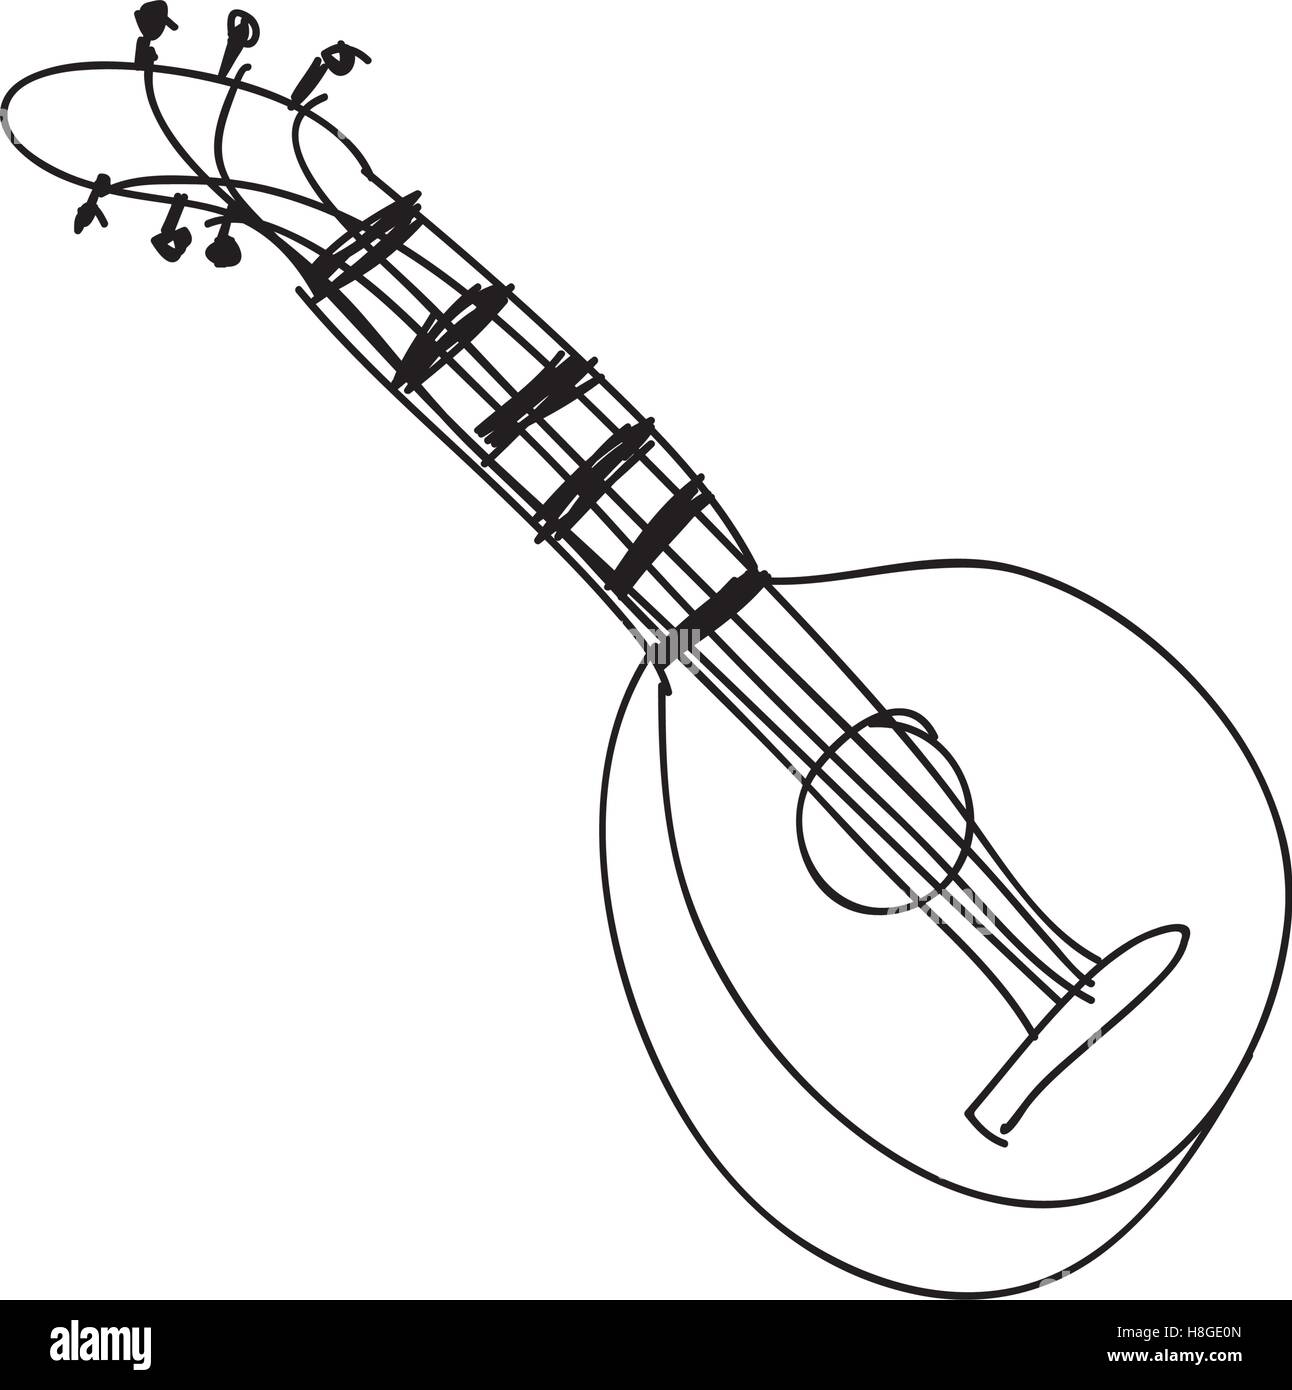 mandolin guitar instrument icon image vector illustration design Stock Vector